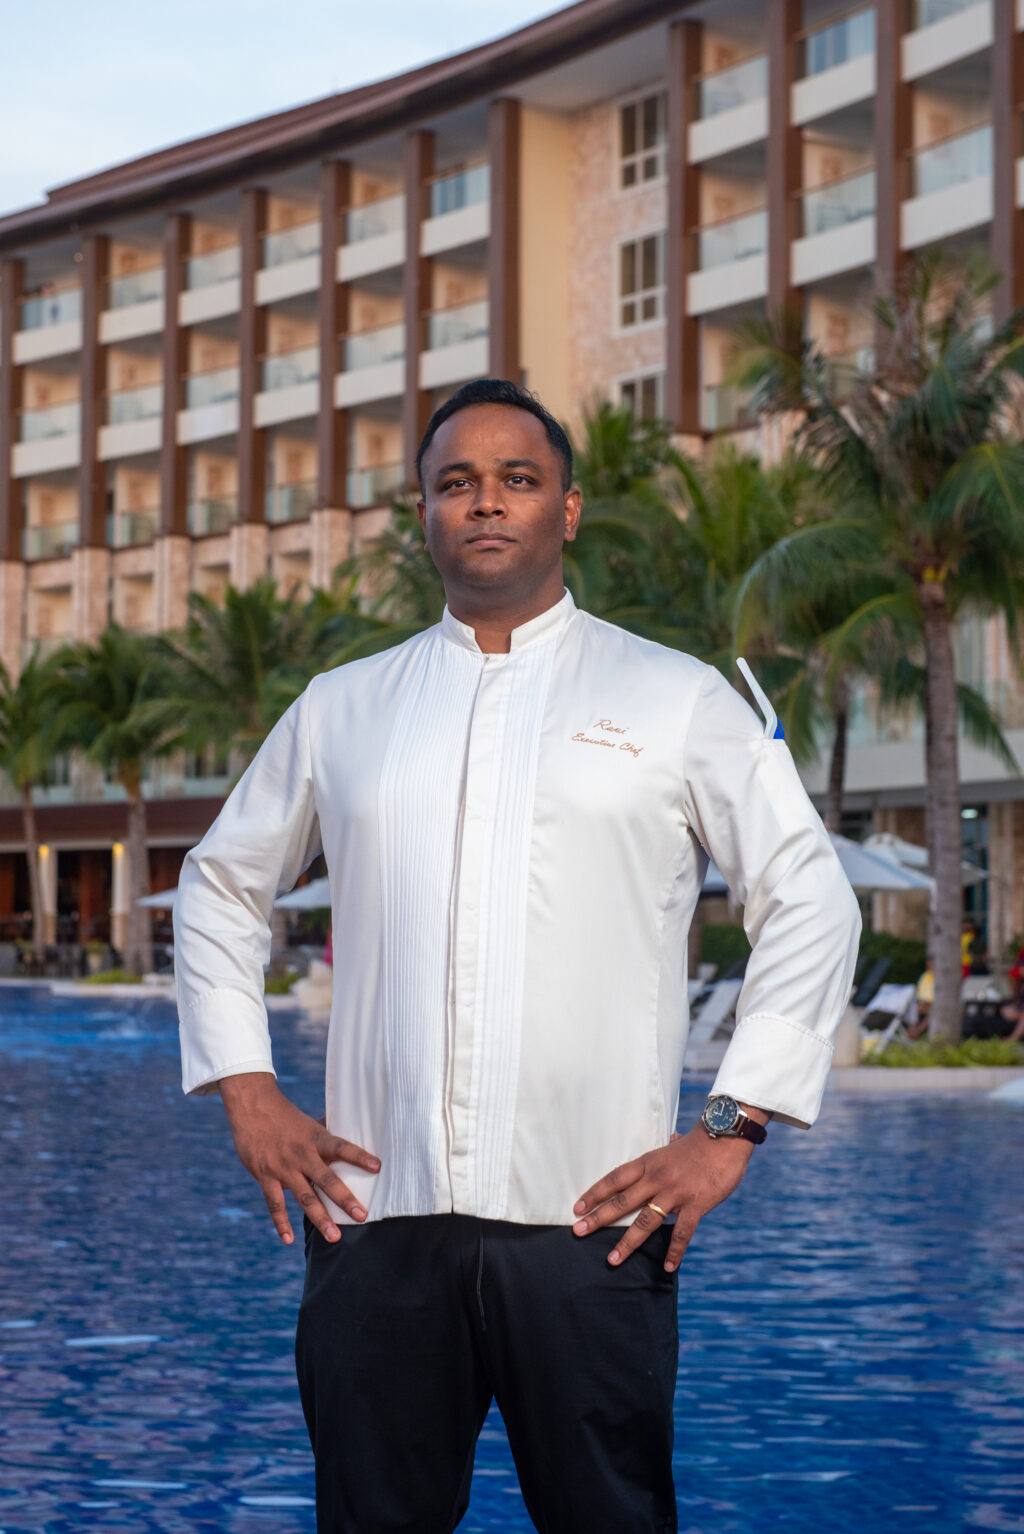 Dusit Thani Mactan Cebu Resort executive chef, Chef Karthik Ravi standing in front of the resort's pool and facade